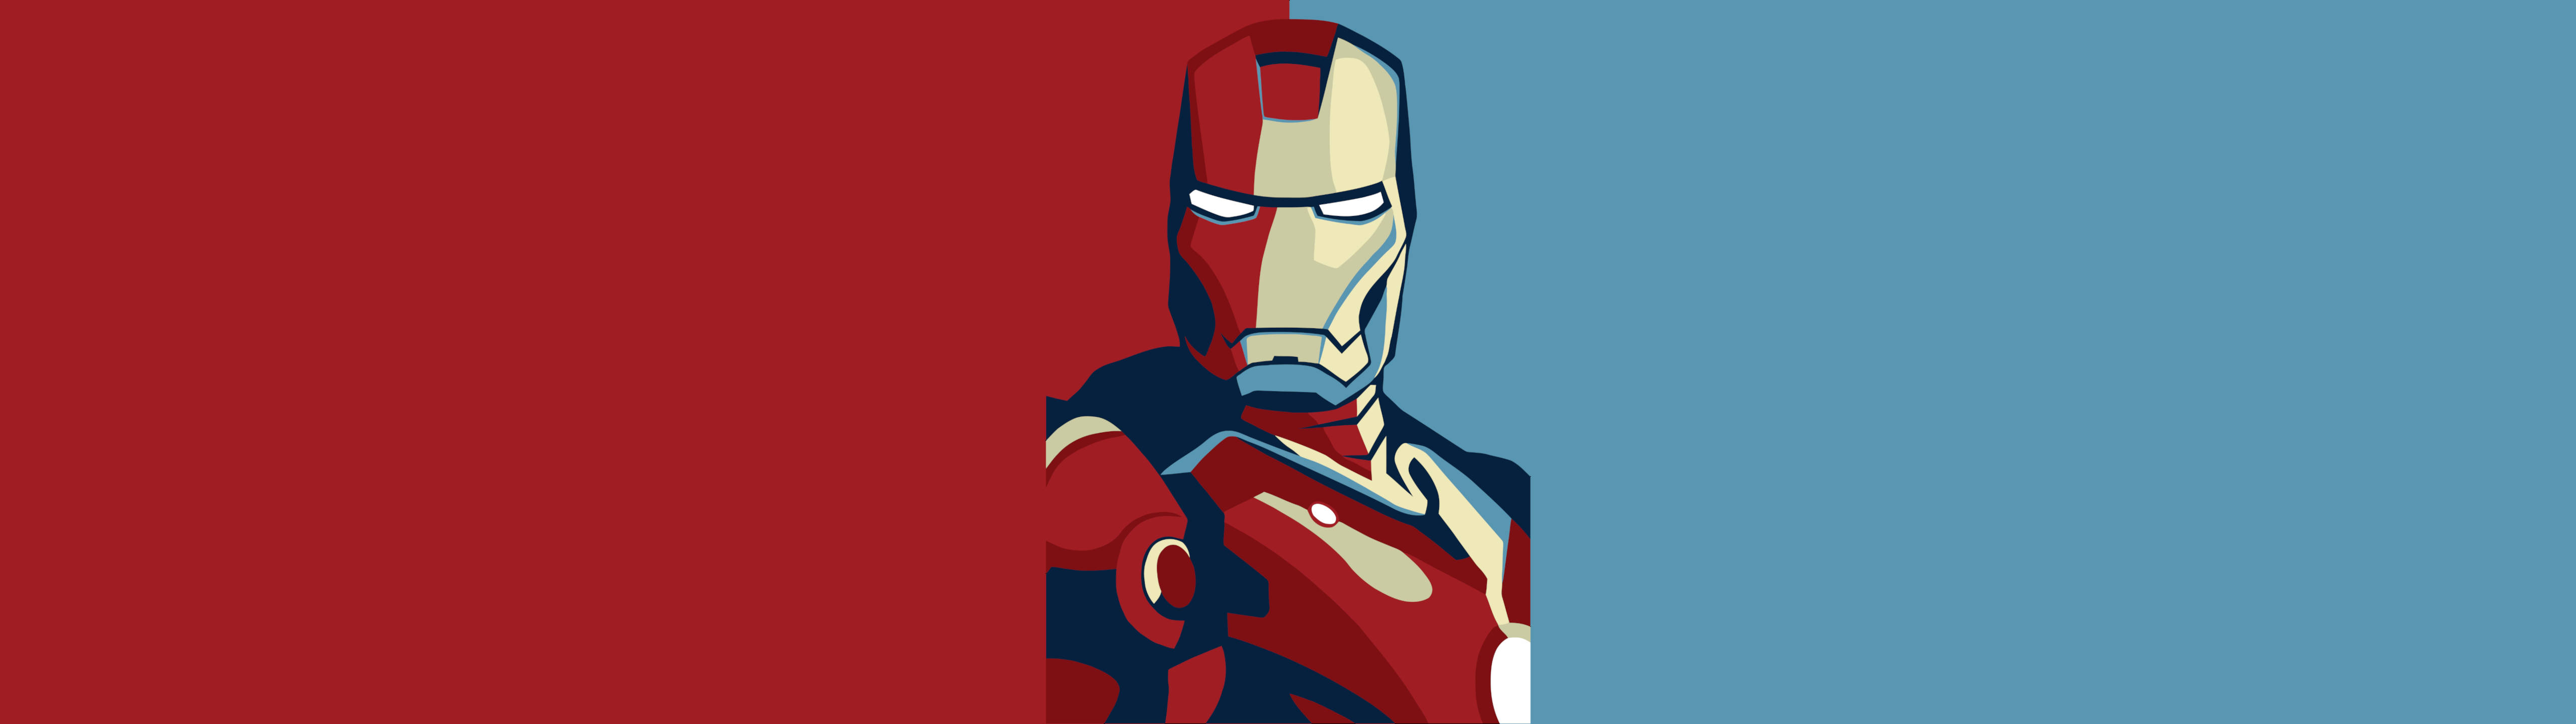 Marvel Hero Ironman 5120 X 1440